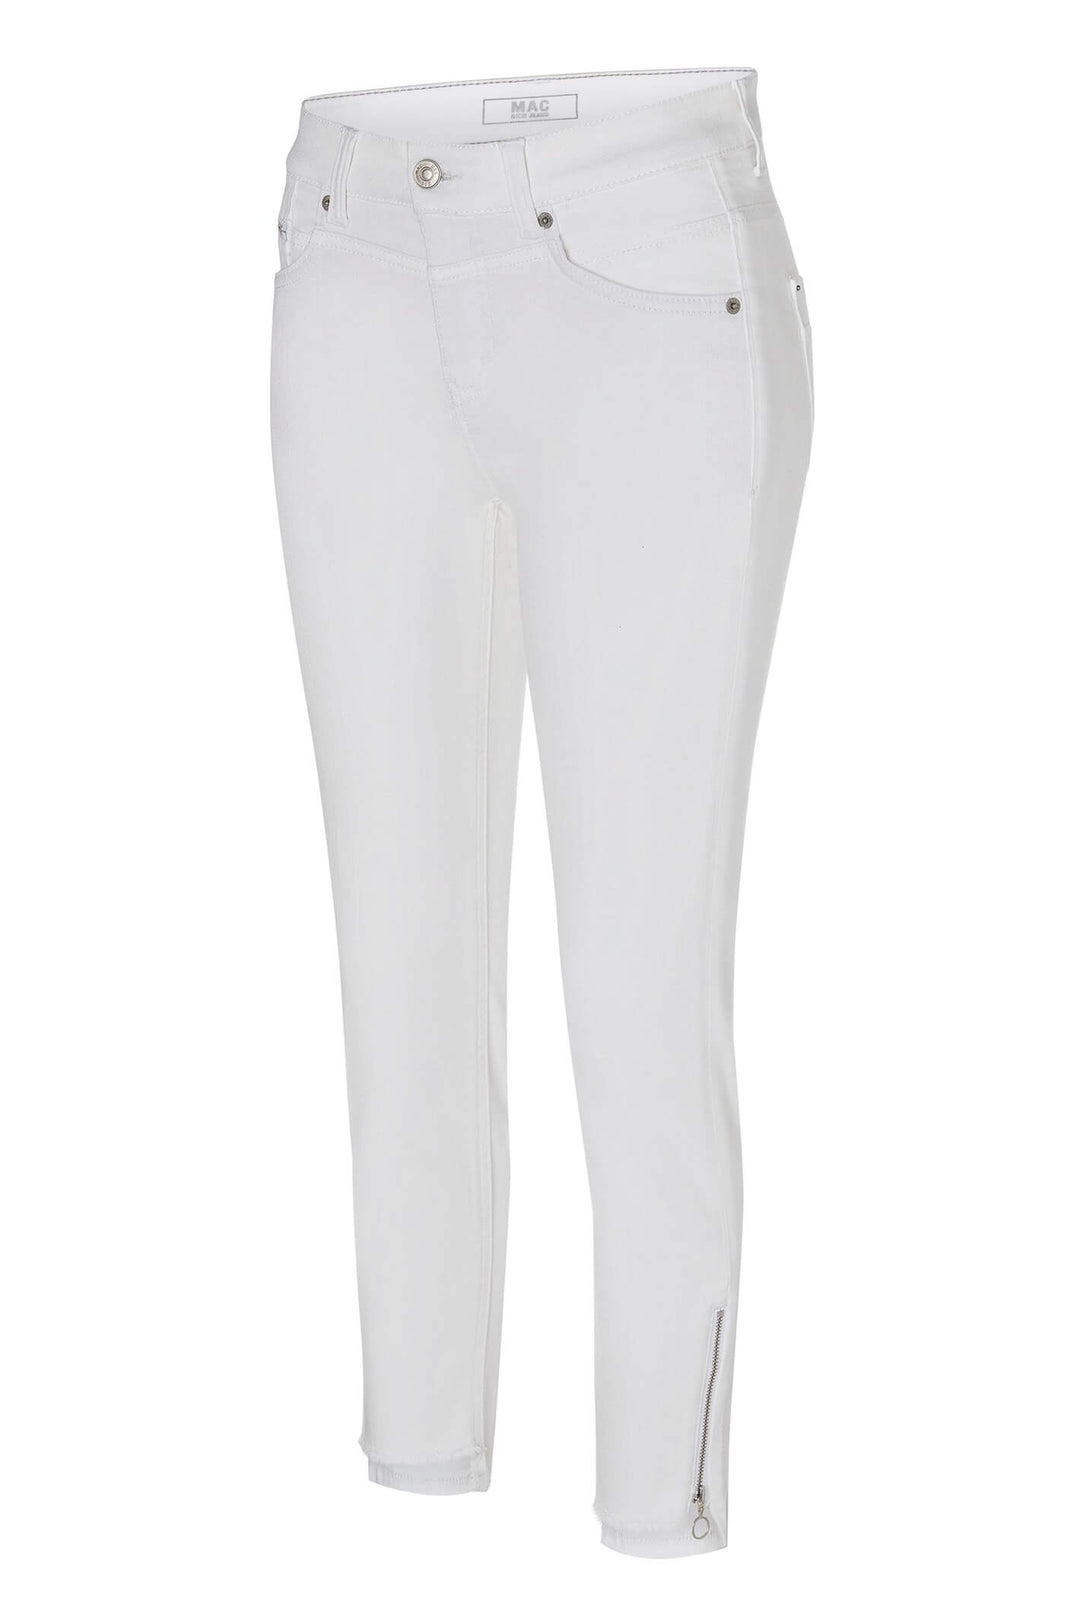 MAC Rich Slim Chic 5755-90-0389L D010 White Denim Jeans - Olivia Grace Fashion